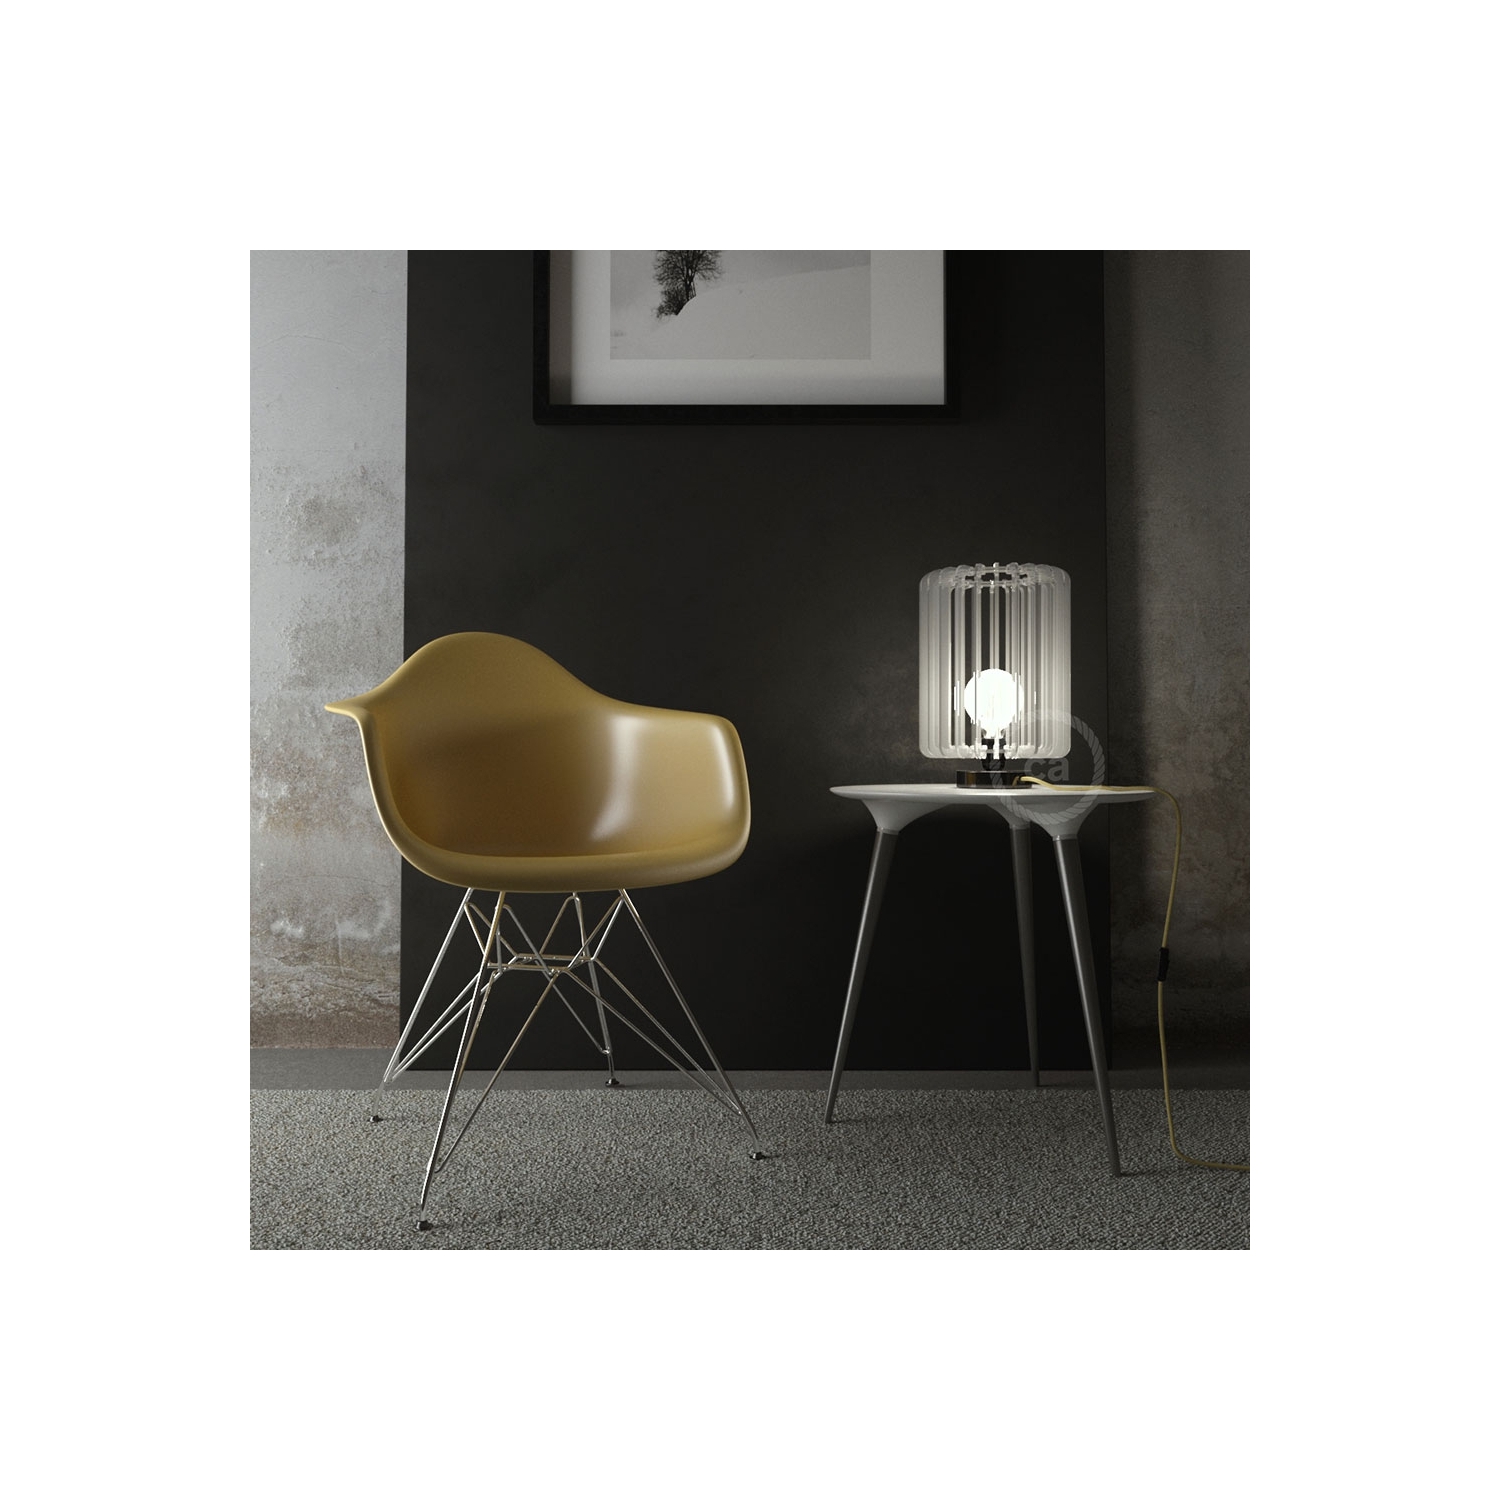 The Posaluce | Black Pearl Metal Table Lamp for Lampshade